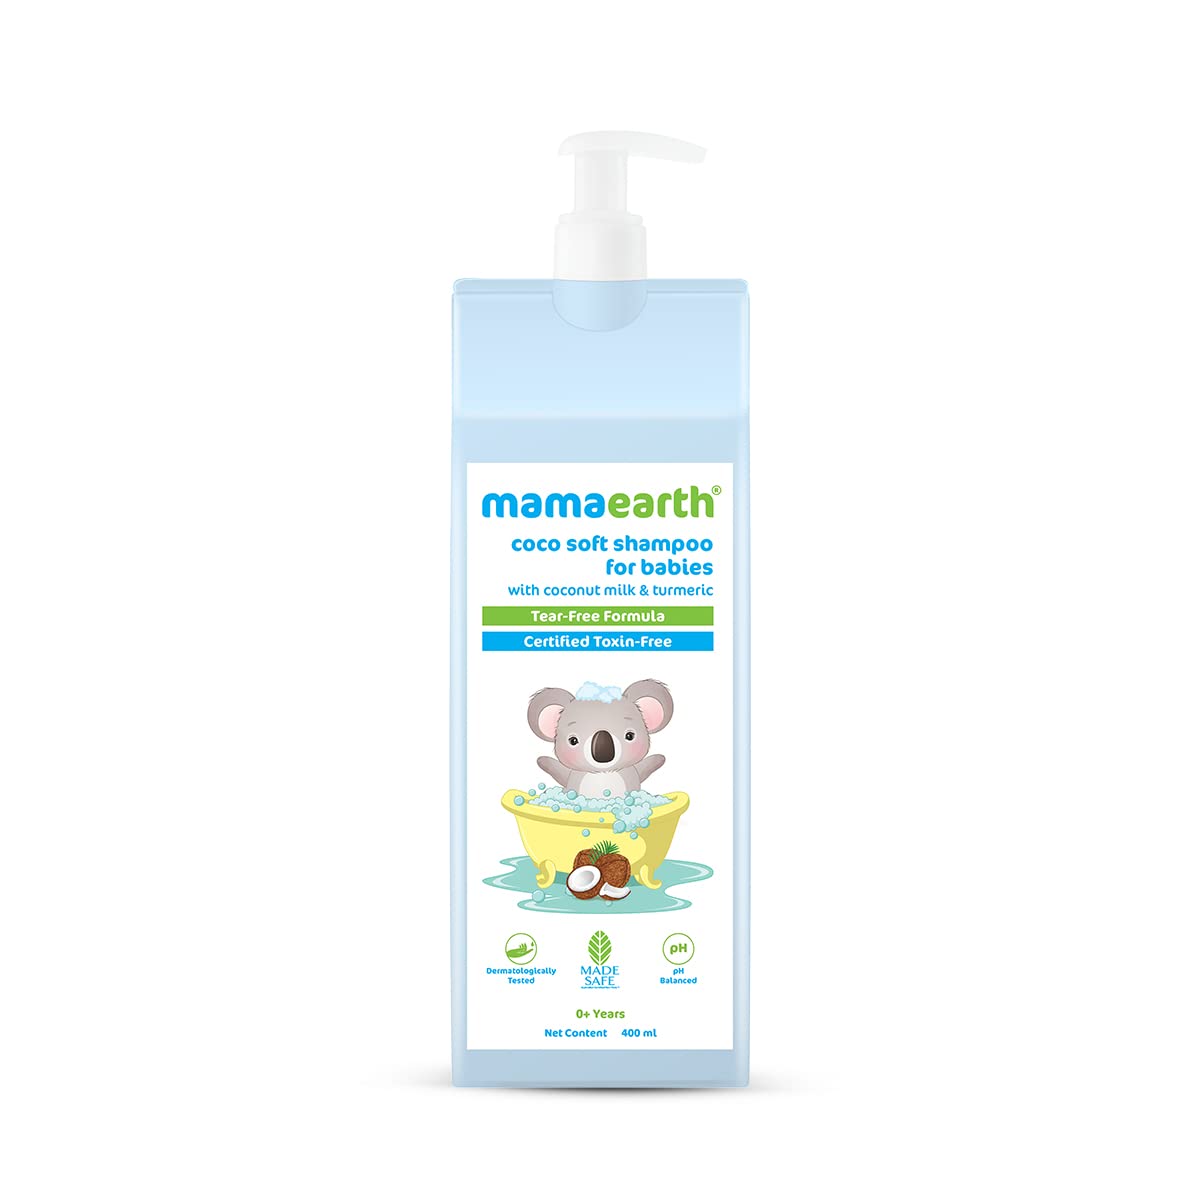 Mamaearth coco soft shampoo for babies with coconut milk & turmeric 400 ml